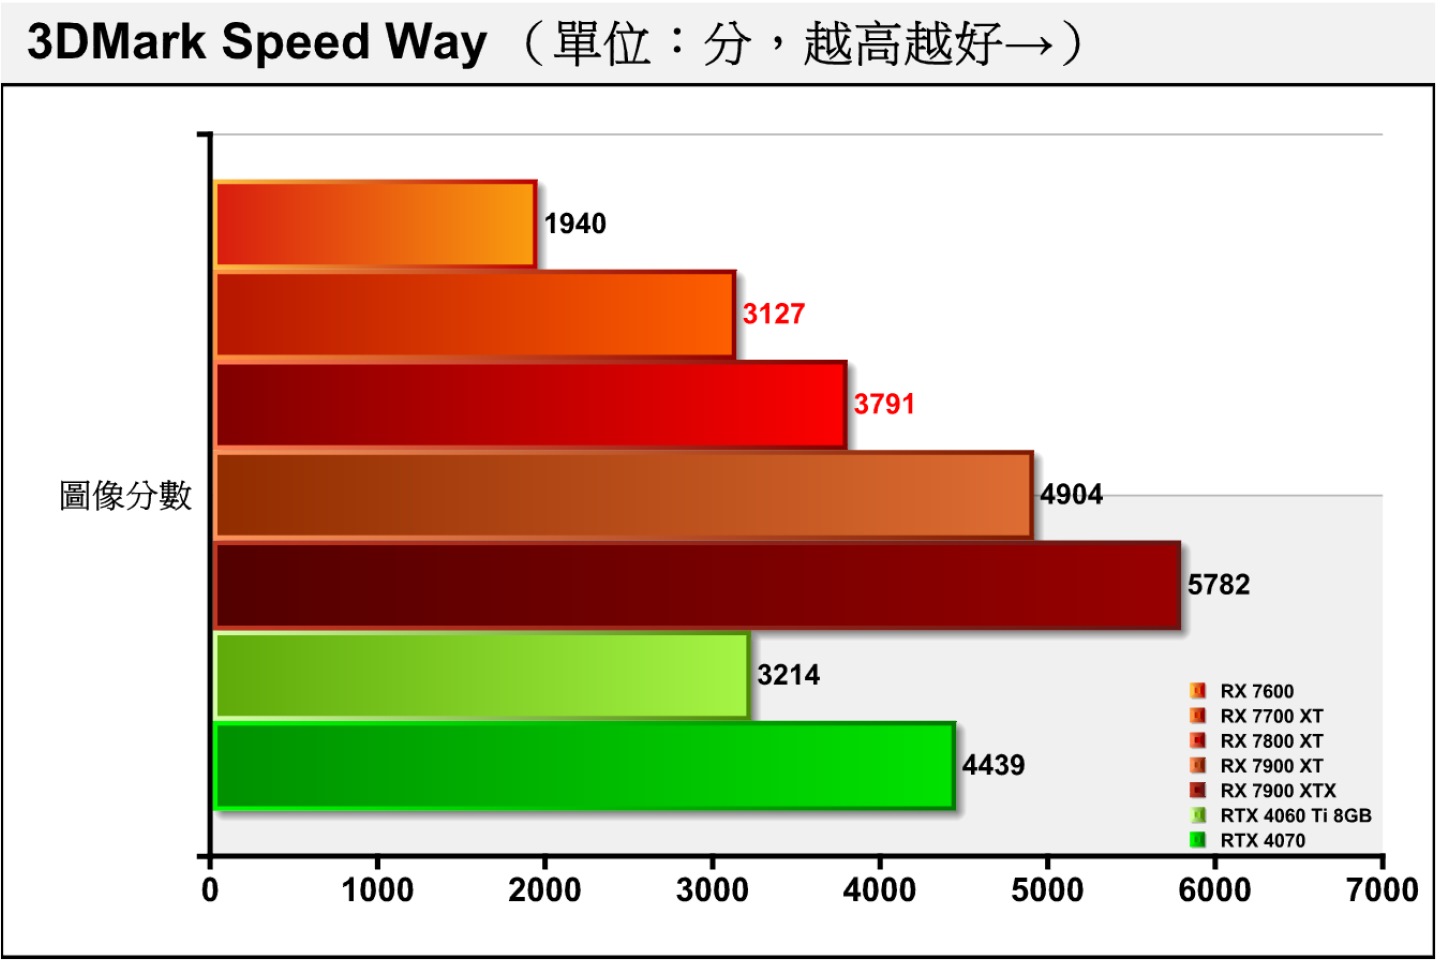 Speed Way是採用DirectX 12 Ultimate繪圖API與DirectX Raytracing tier 1.1光線追蹤技術，具有全域照明與反射效果，並透過Mesh Shaders進行效能最佳化，可以反映最新AAA大作遊戲的效能表現。由於AMD陣營光線追蹤效能較弱的原故，2者的分數分別落後14.59%、2.72%。